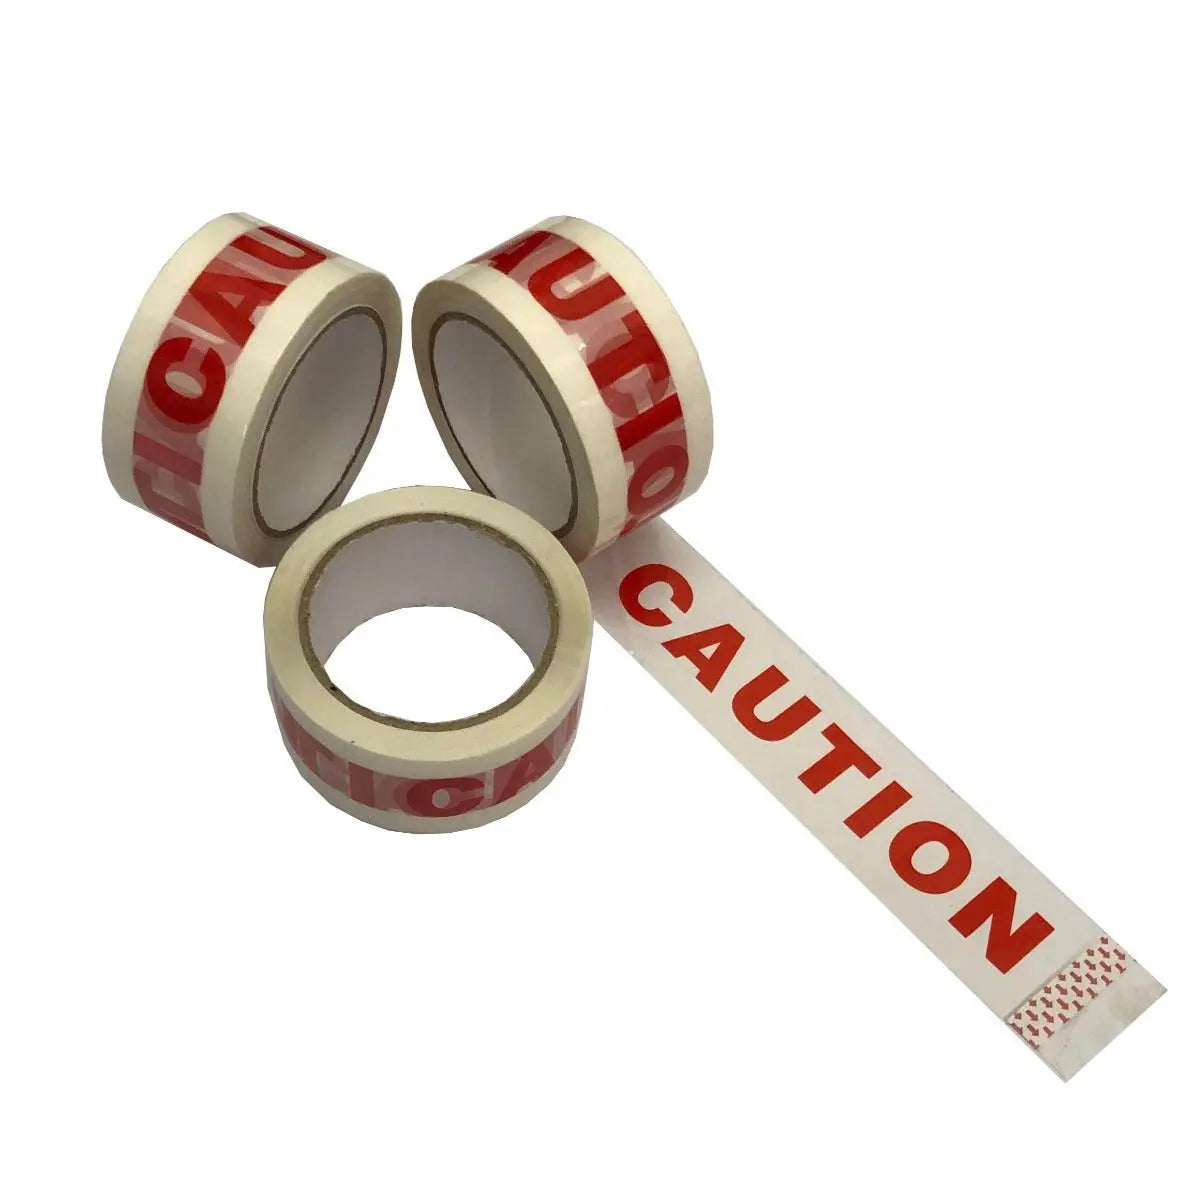 Adhesive red & white caution tape